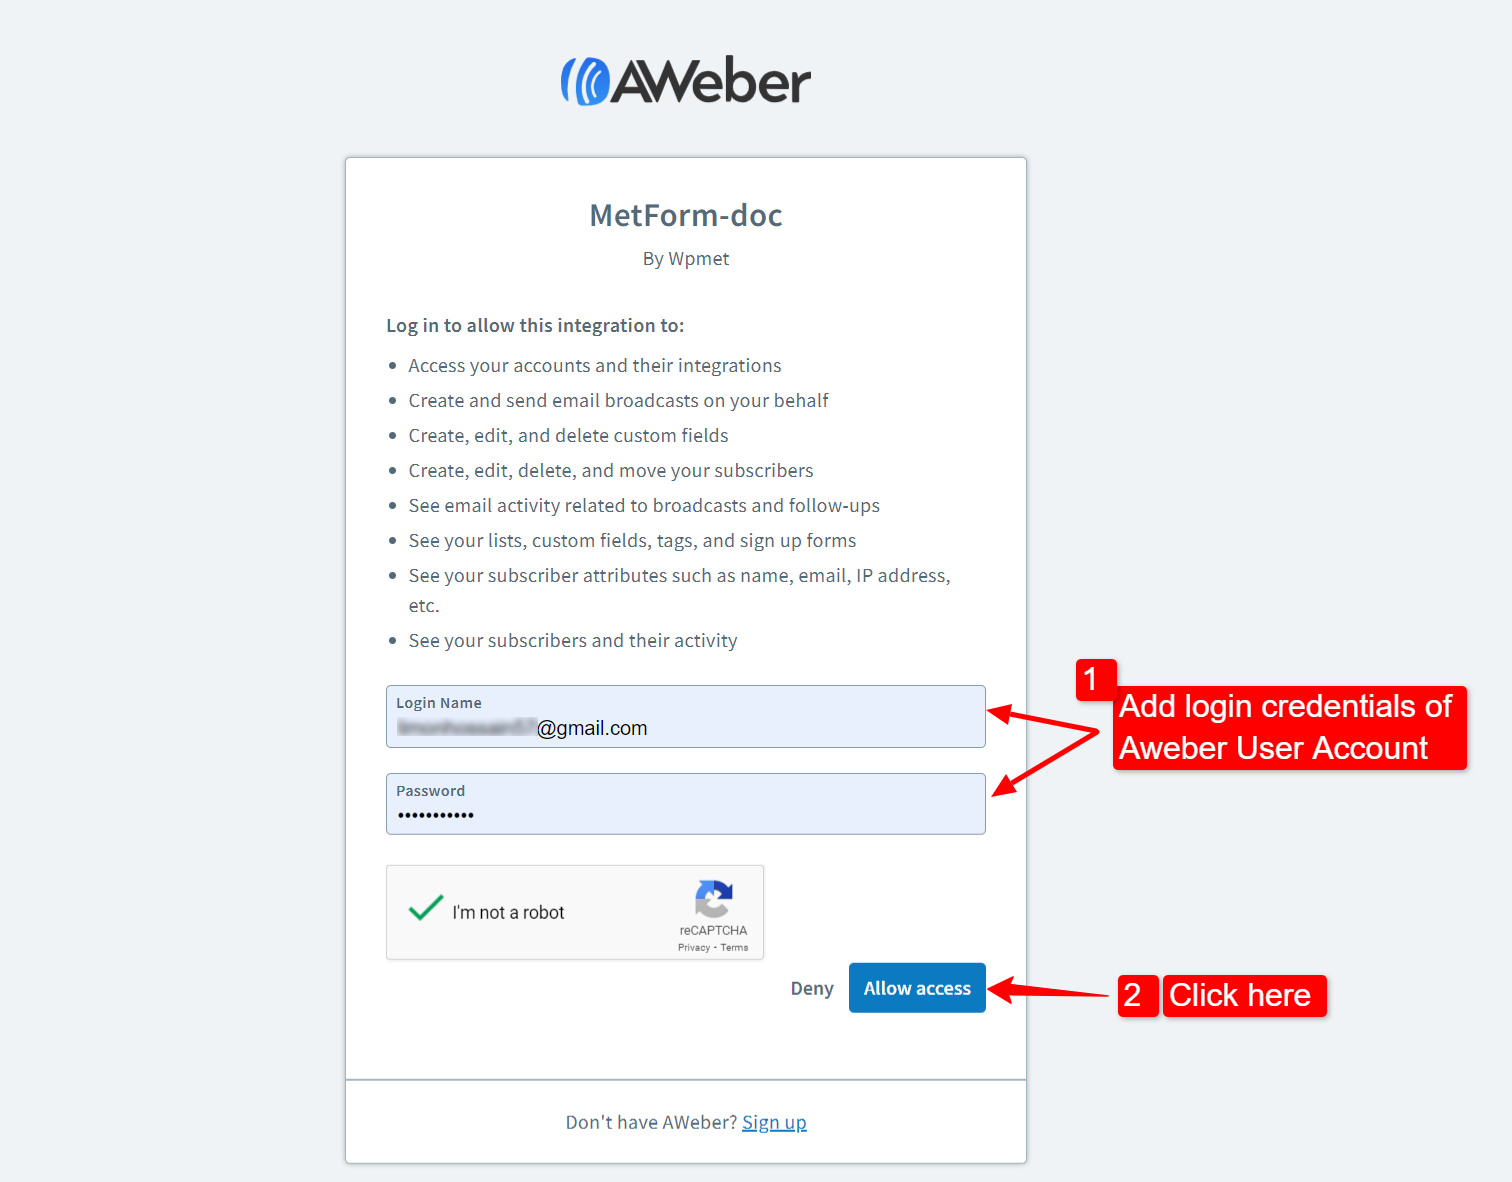 Login to AWeber user account to allow MetForm integration